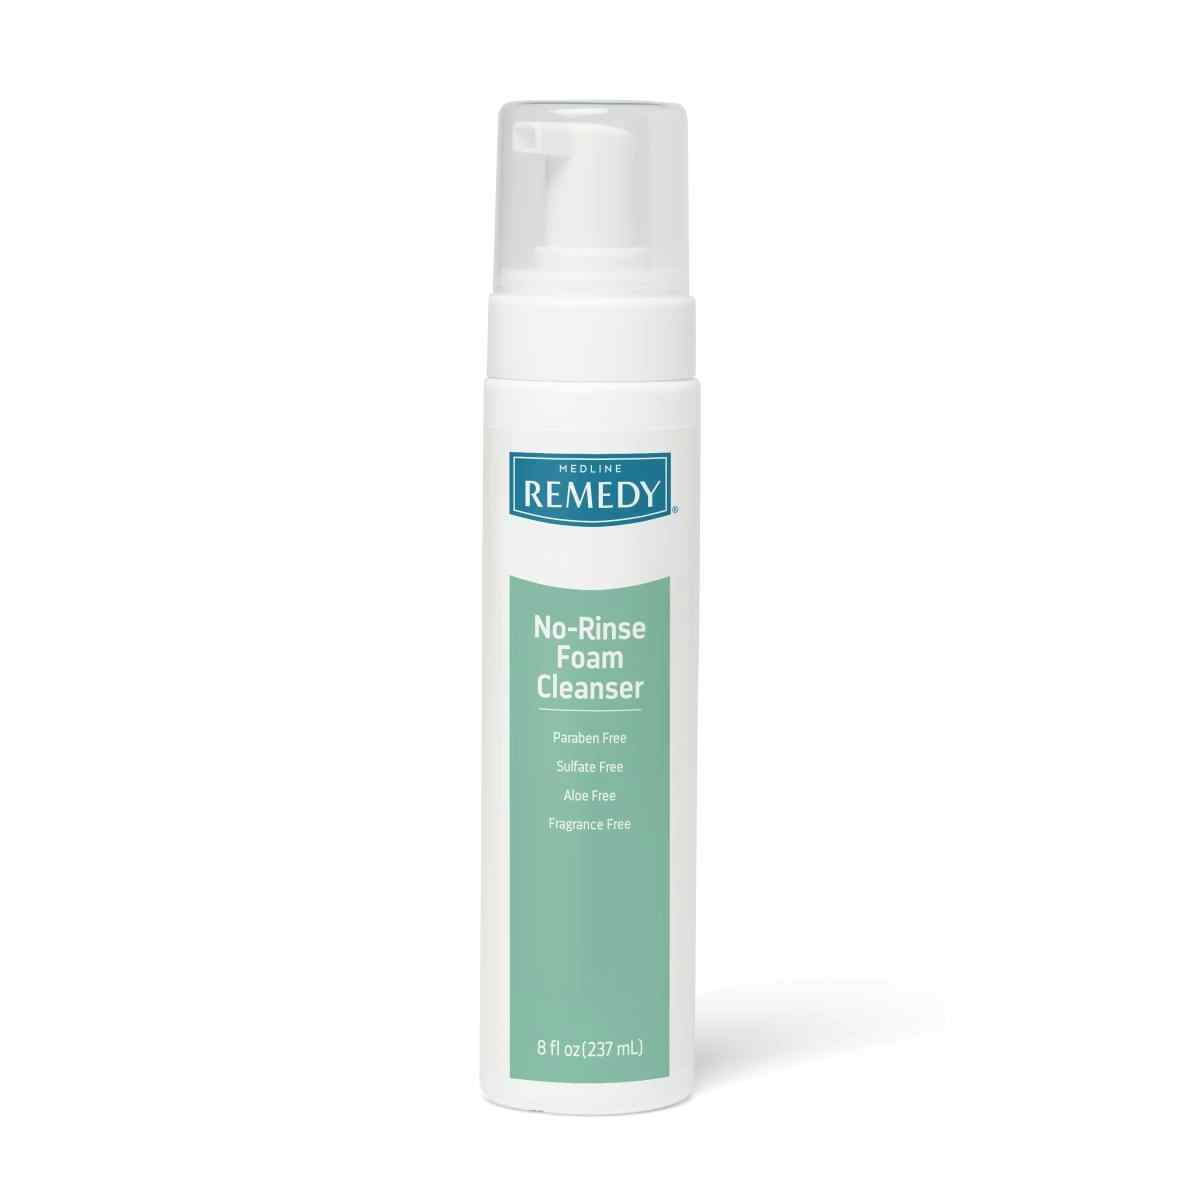 Medline Remedy No-Rinse Foam Cleanser, Pump Bottle, MSC09108, 8 oz. - Case of 12